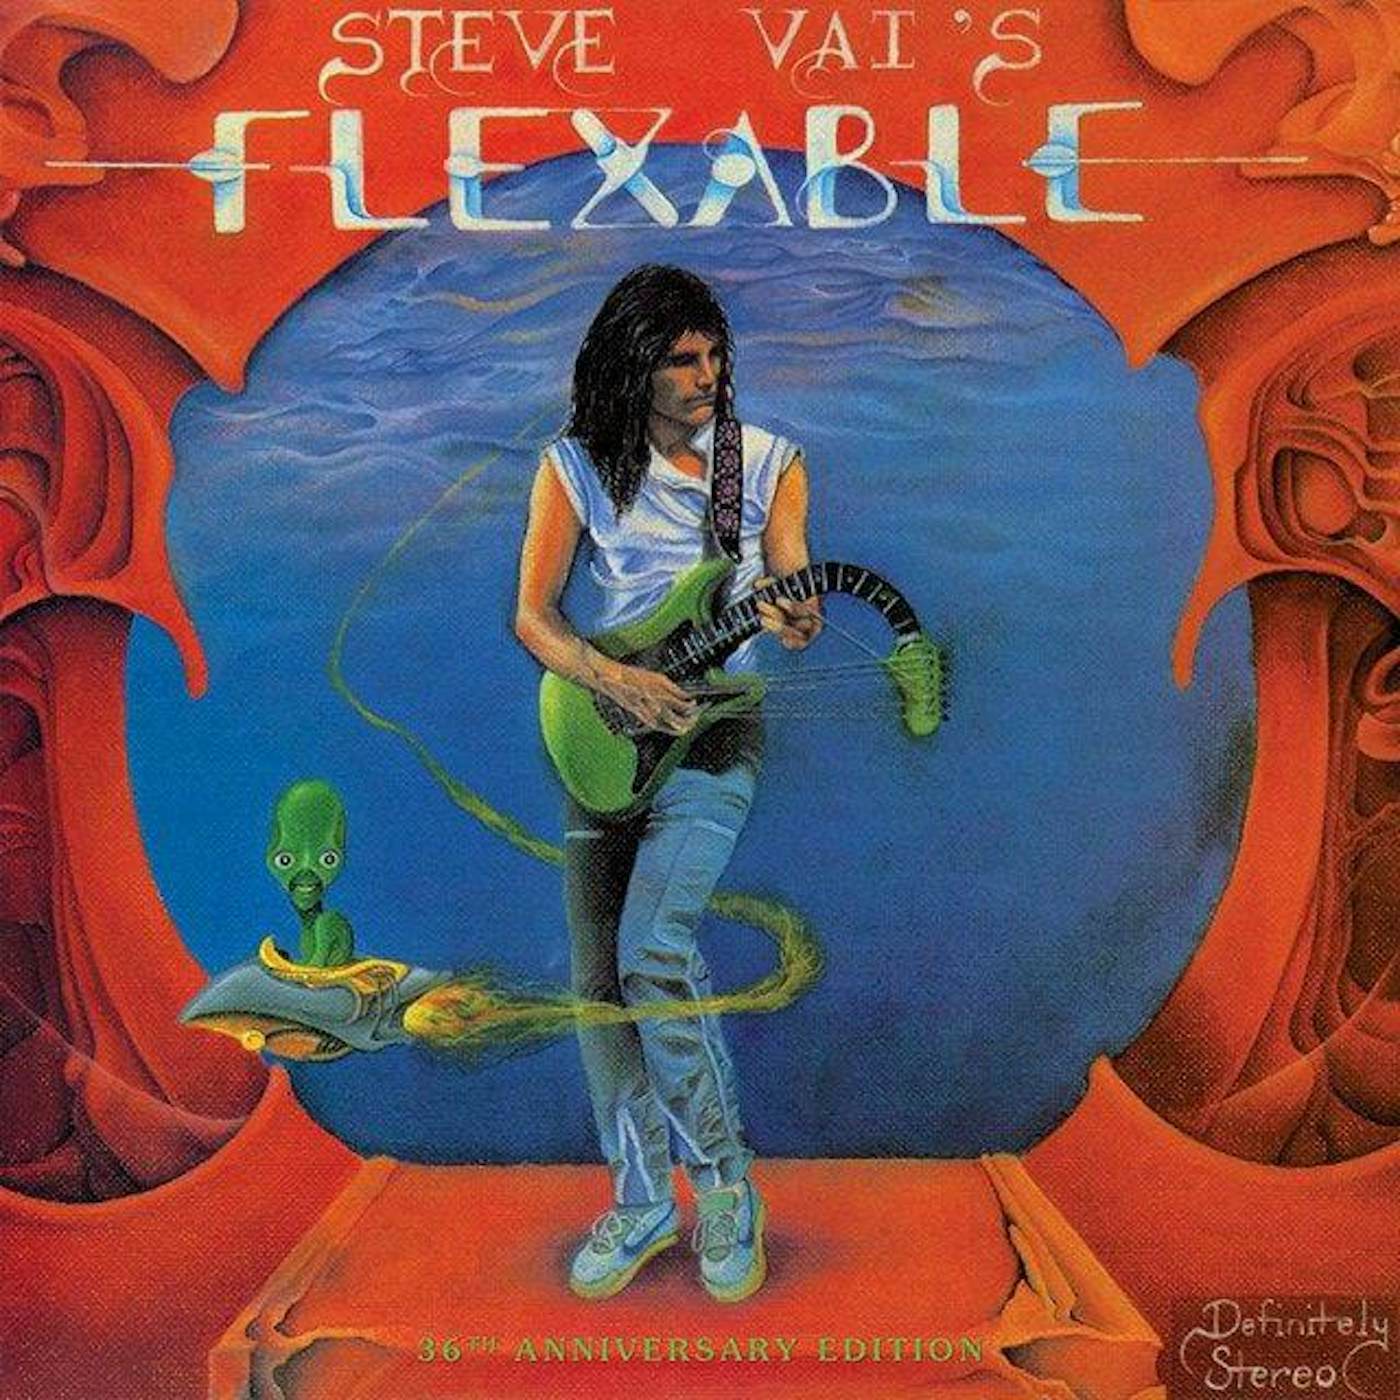 Steve Vai Flex-Able (36th anniversary/picture disc) vinyl record